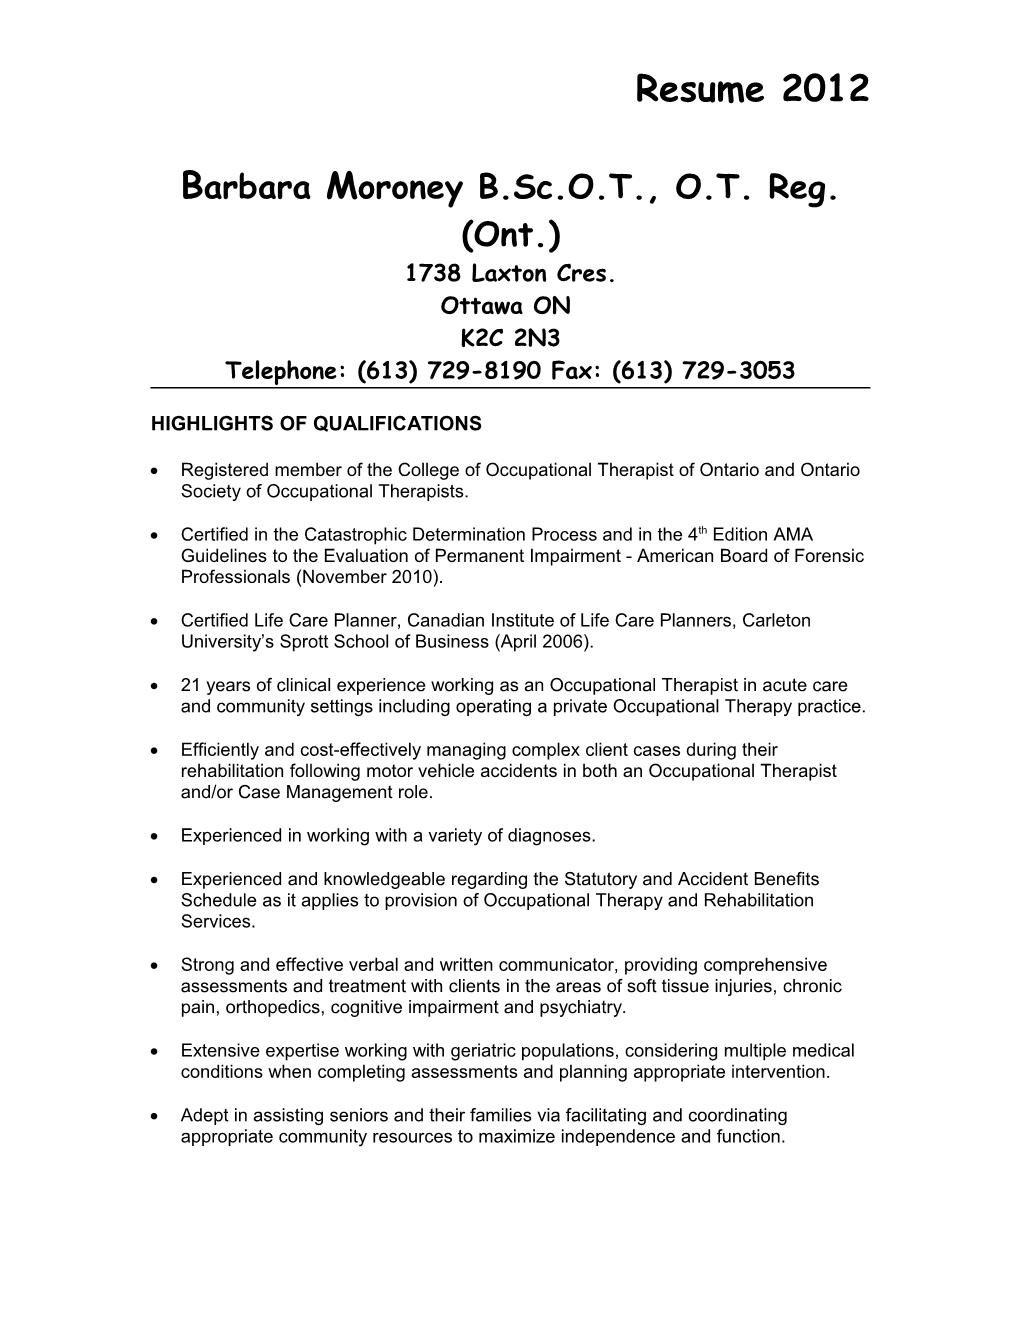 Barbara Moroney B.Sc.O.T., O.T. Reg. (Ont.)